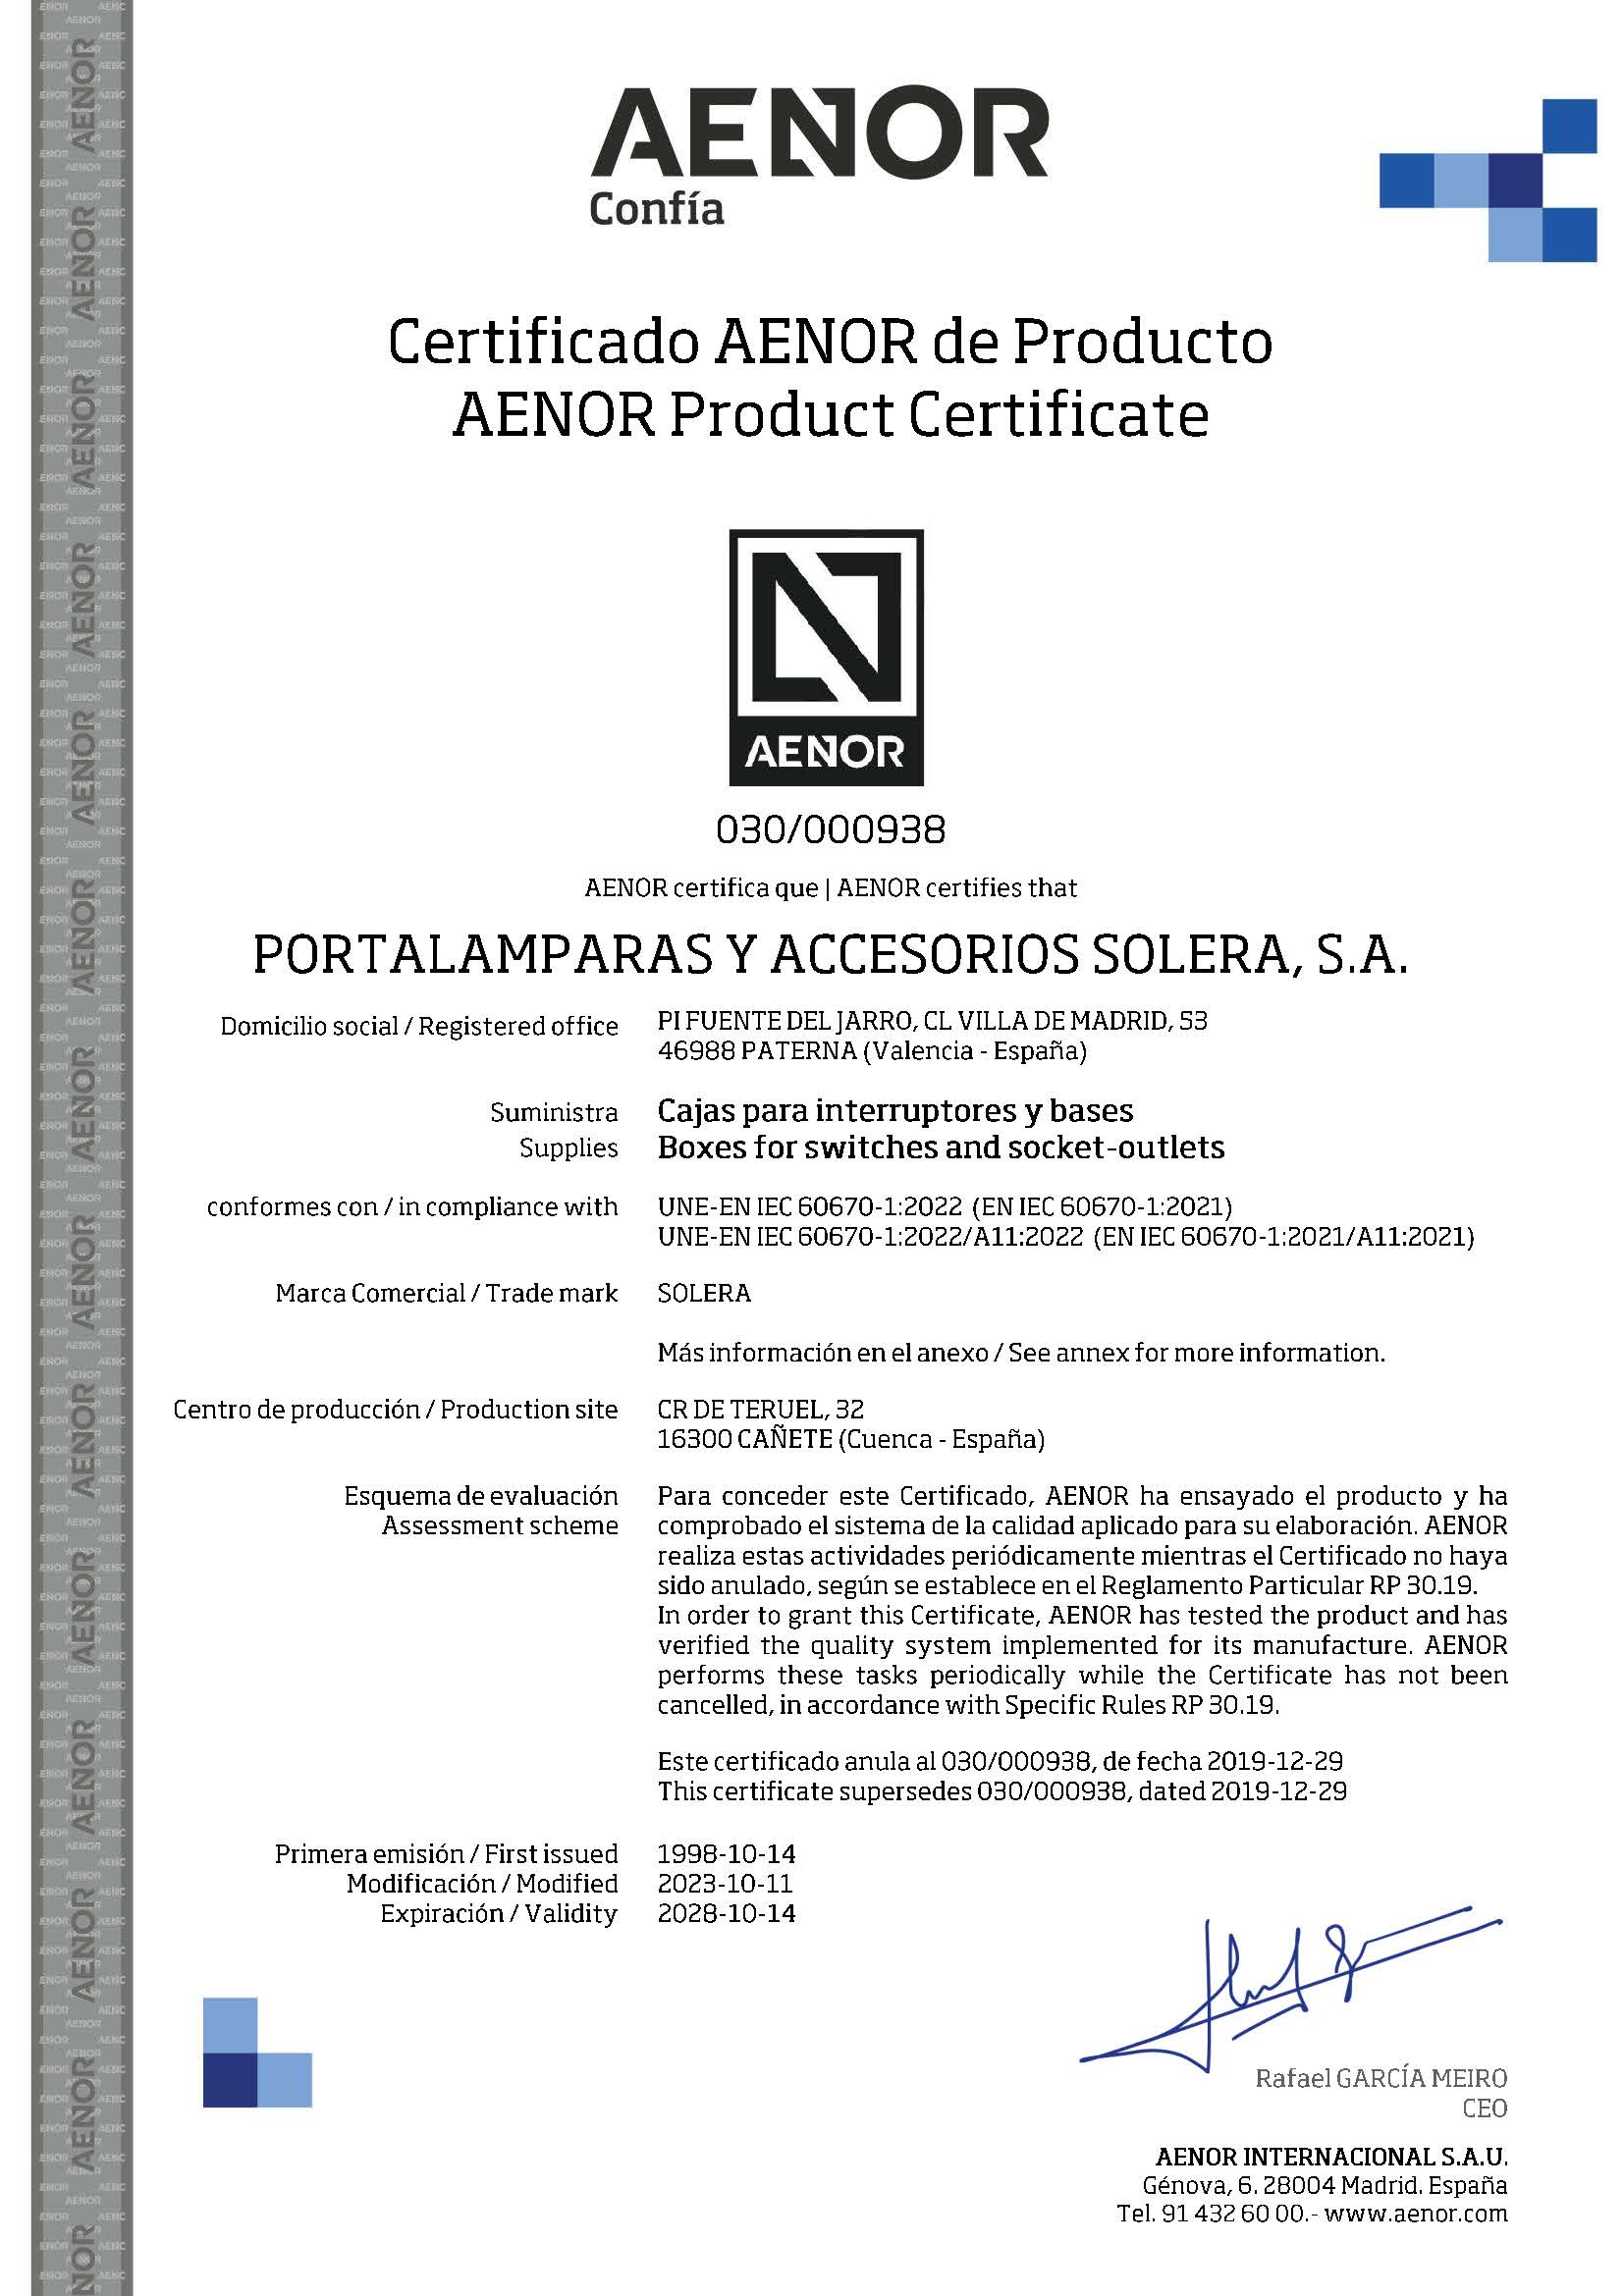 AENOR 6625 product certificate